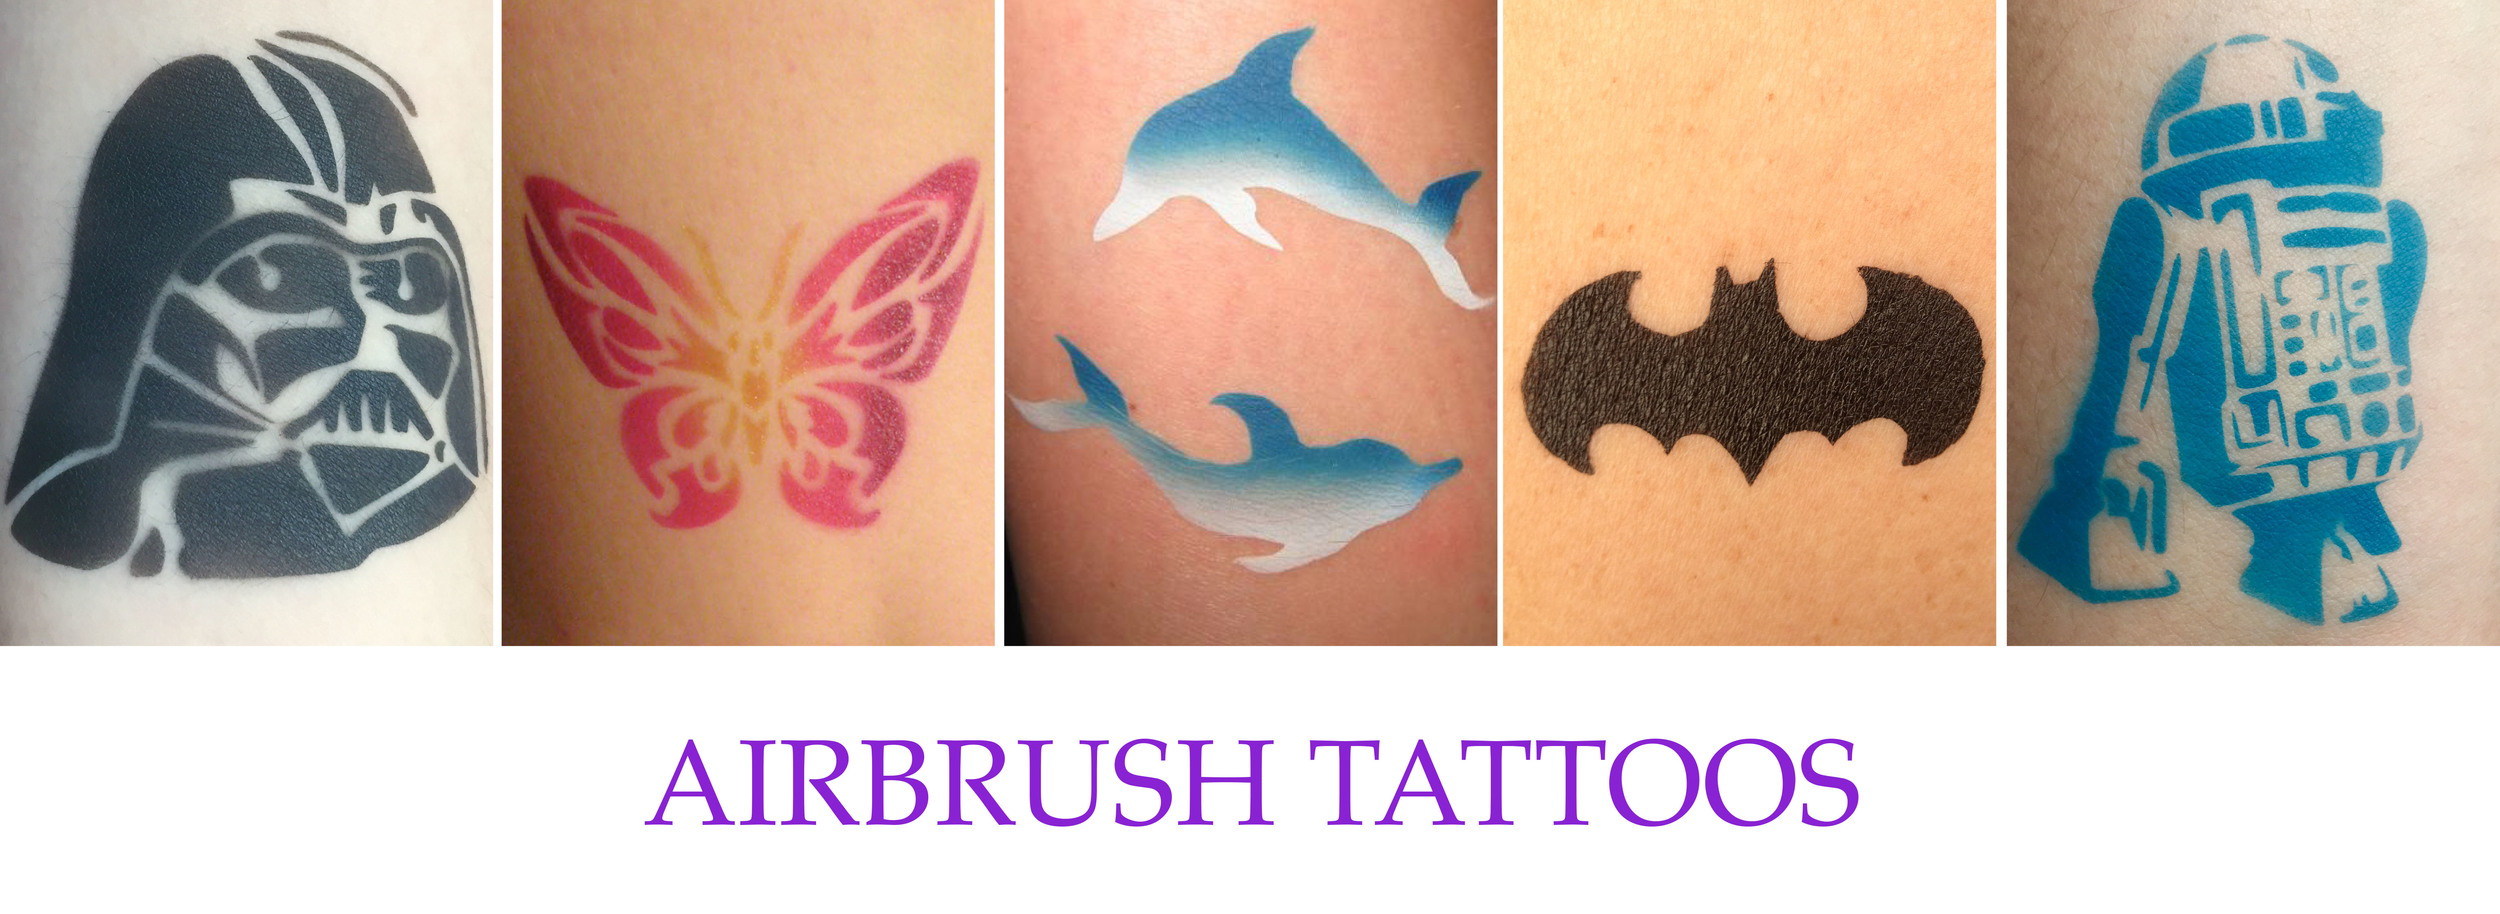 Airbrush Tattoos We Adorn You.jpg